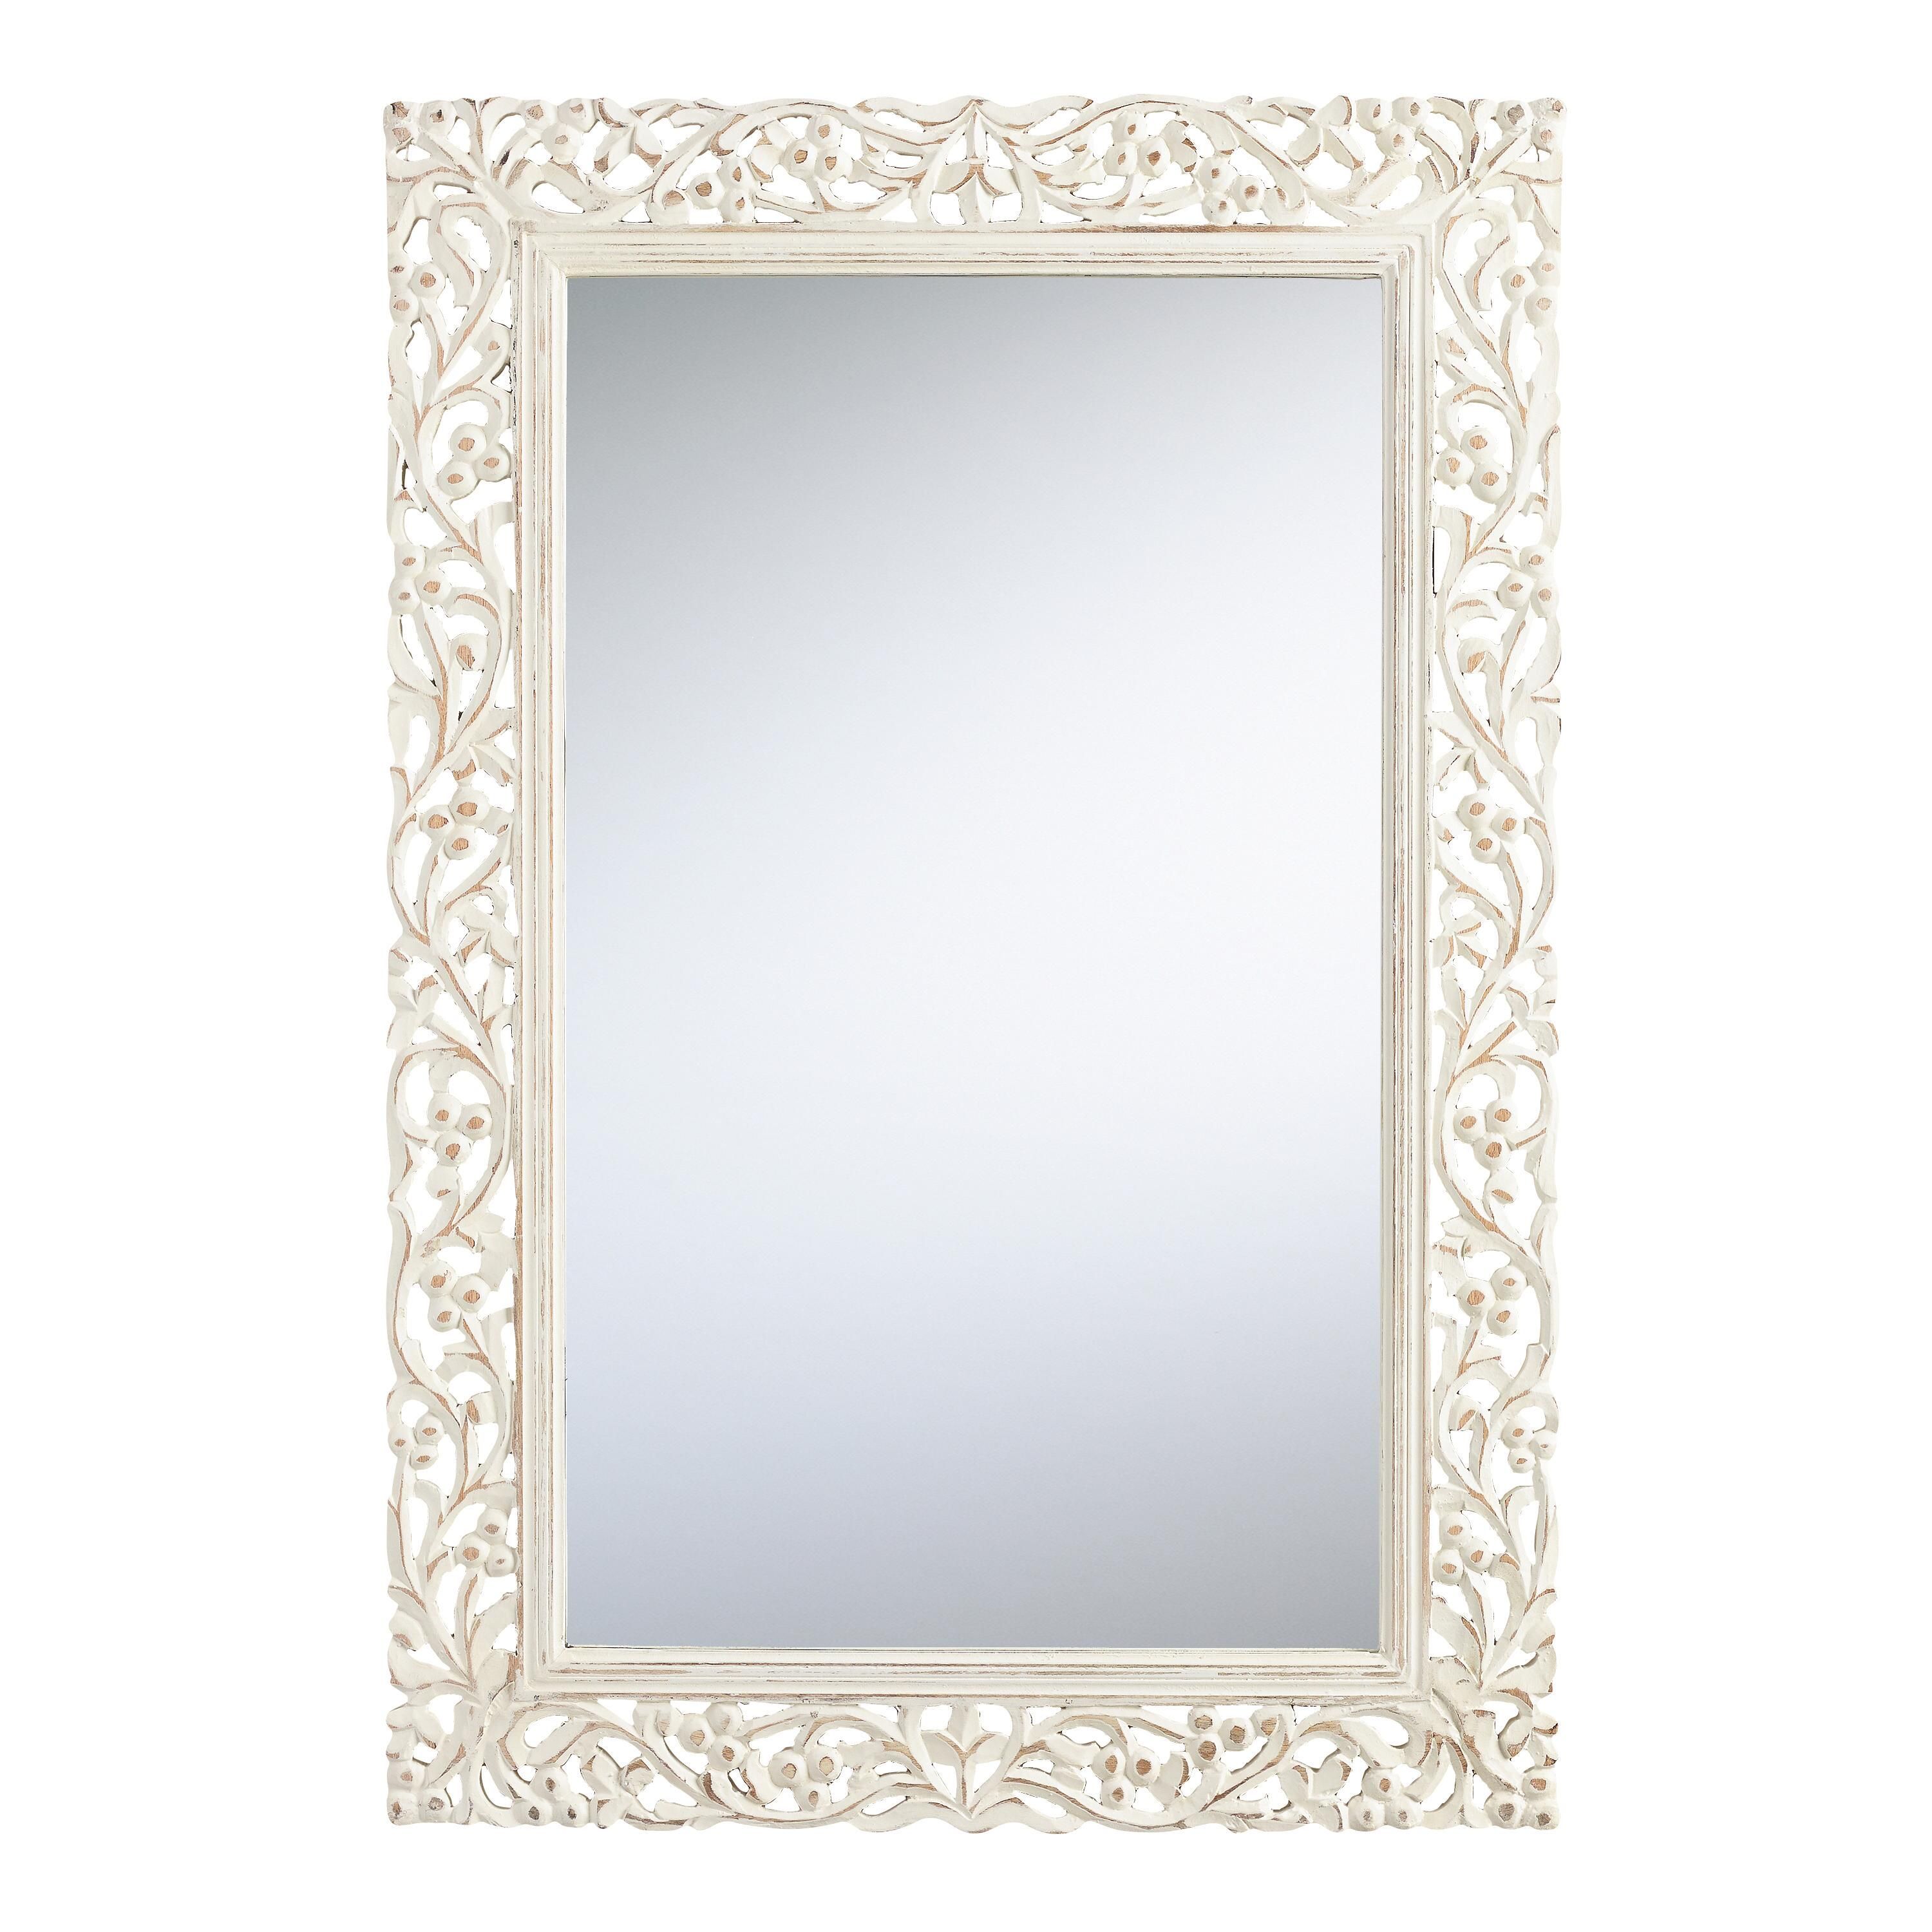 Segovia Whitewashed Mirror | World Market